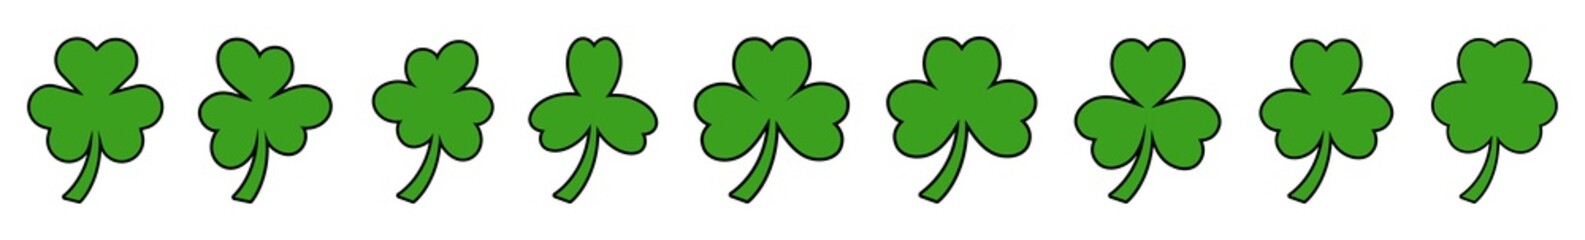 Shamrock Icon Green | Shamrocks | Trefoil | Clover Leaf | Irish Symbol | St Patrick's Day Logo | Luck Sign | Isolated | Variations